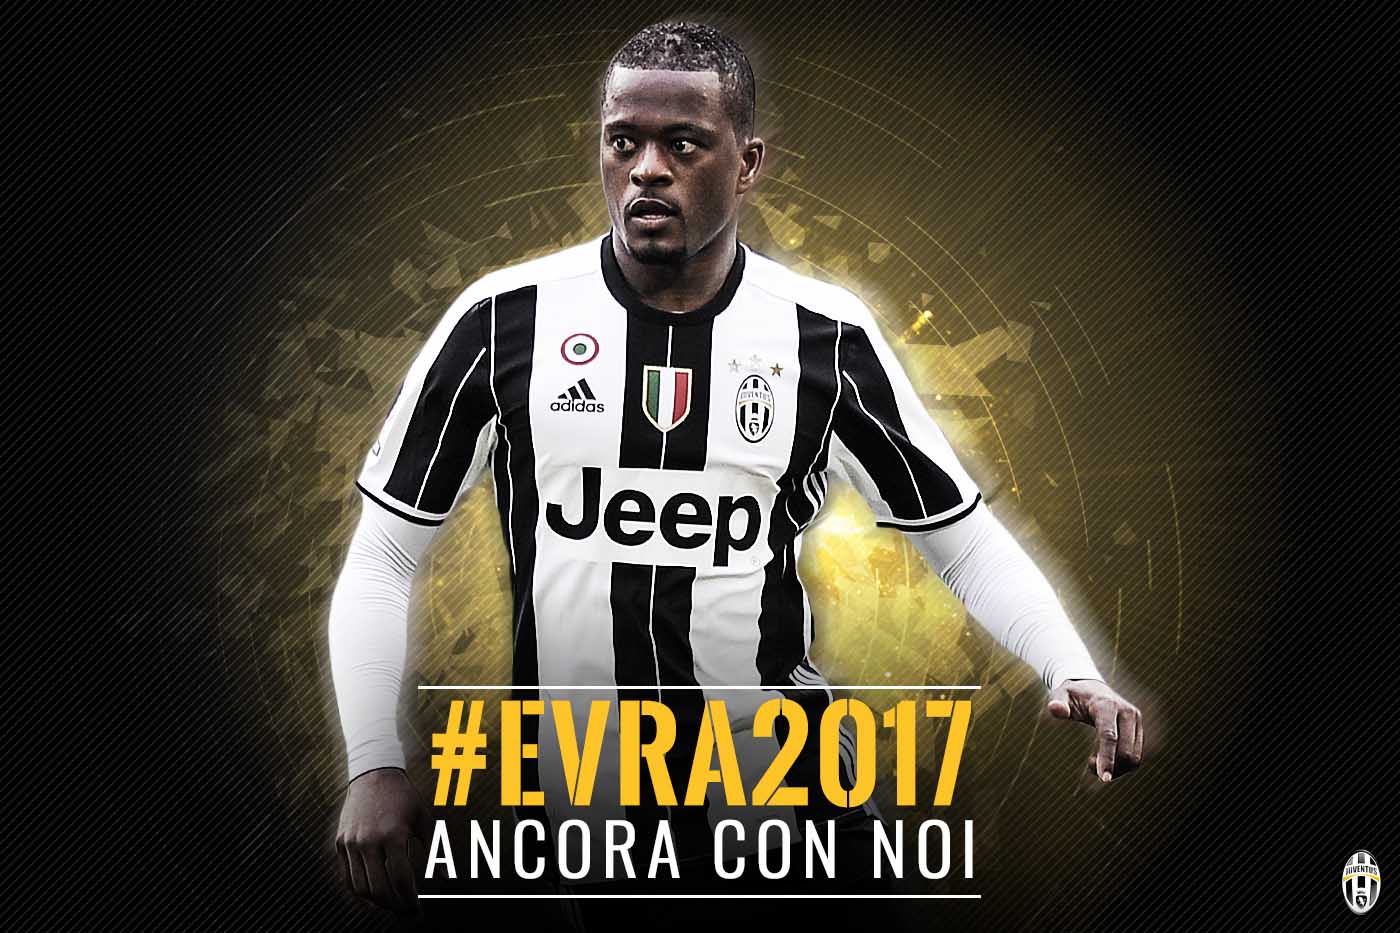 OFFICIAL: Patrice Evra renews with Juventus until 2017 -Juvefc.com